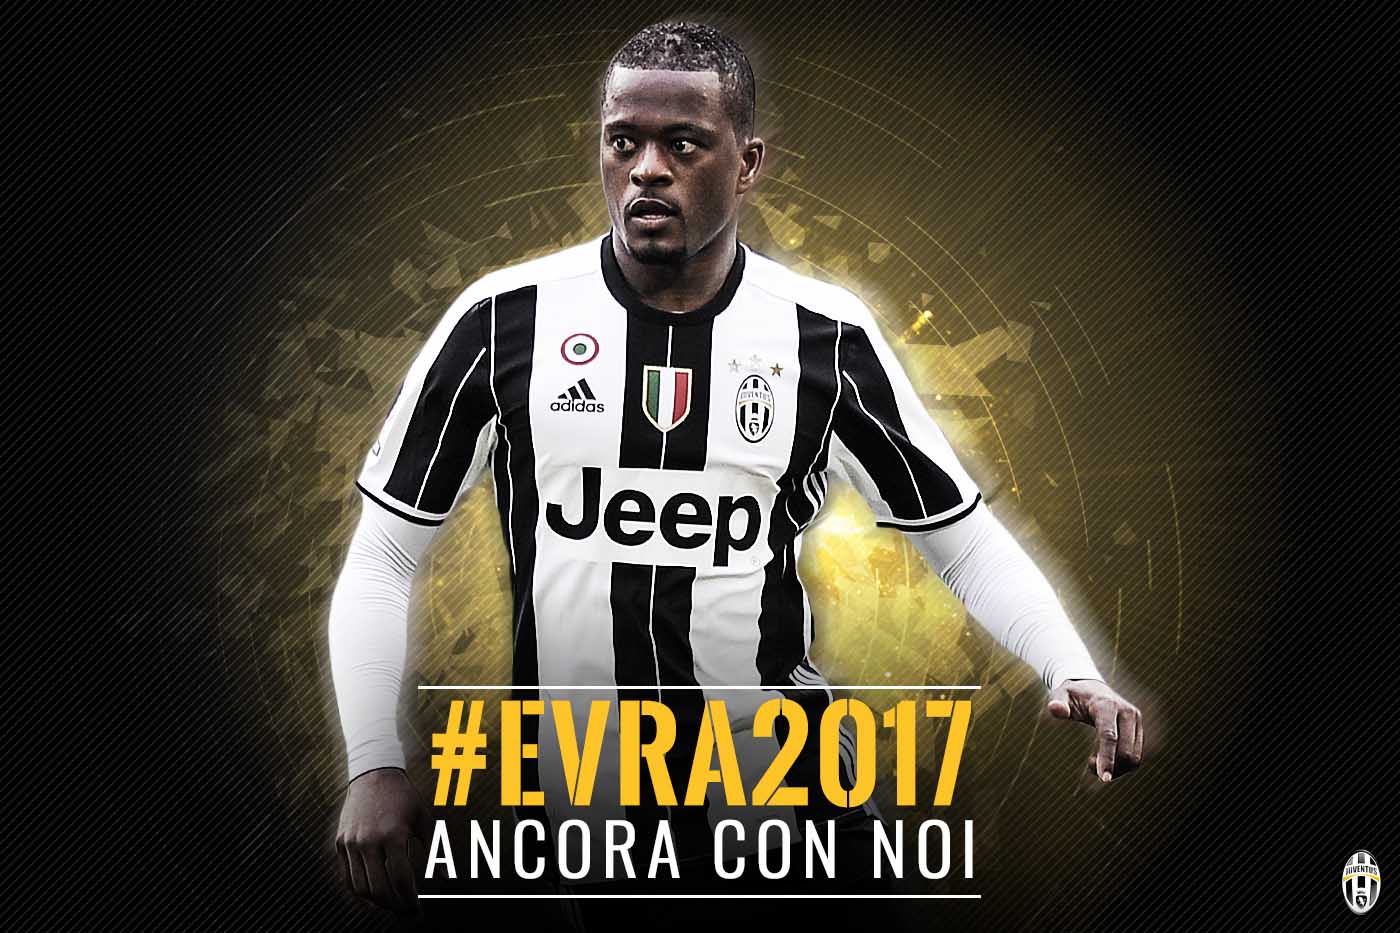 OFFICIAL: Patrice Evra renews with Juventus until 2017 -Juvefc.com